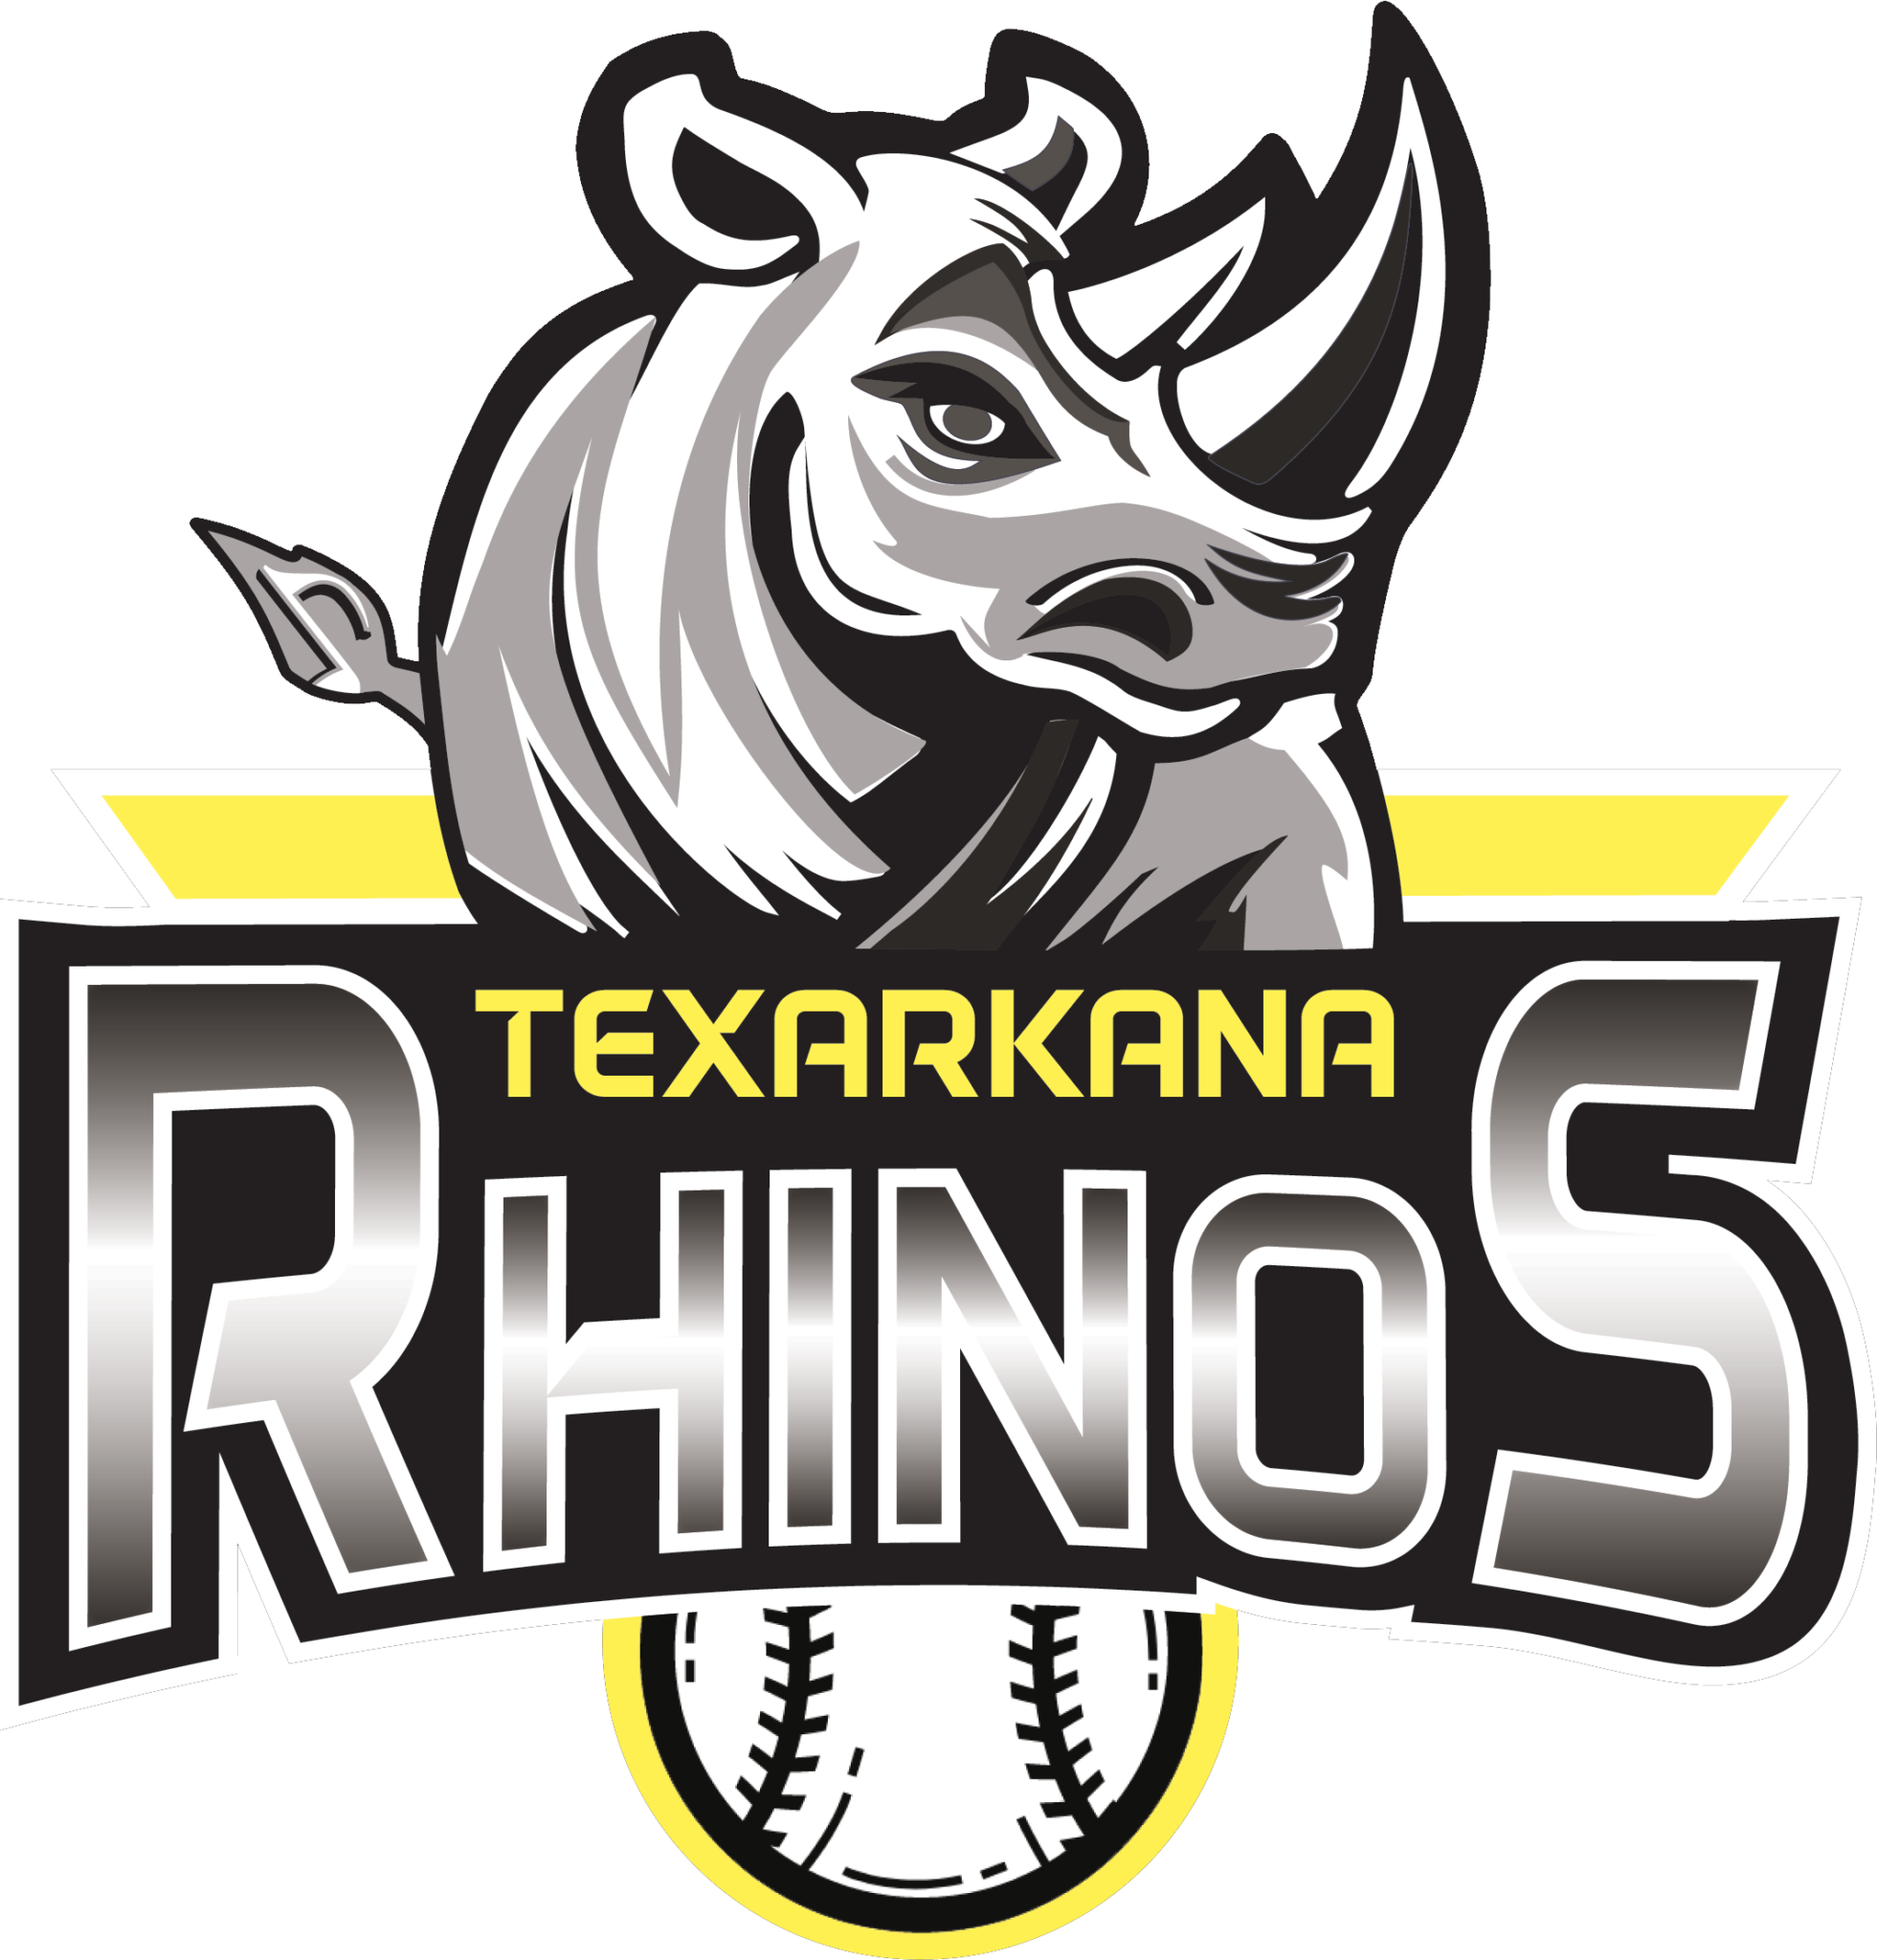 Texarkana Rhinos Team Name Announcement